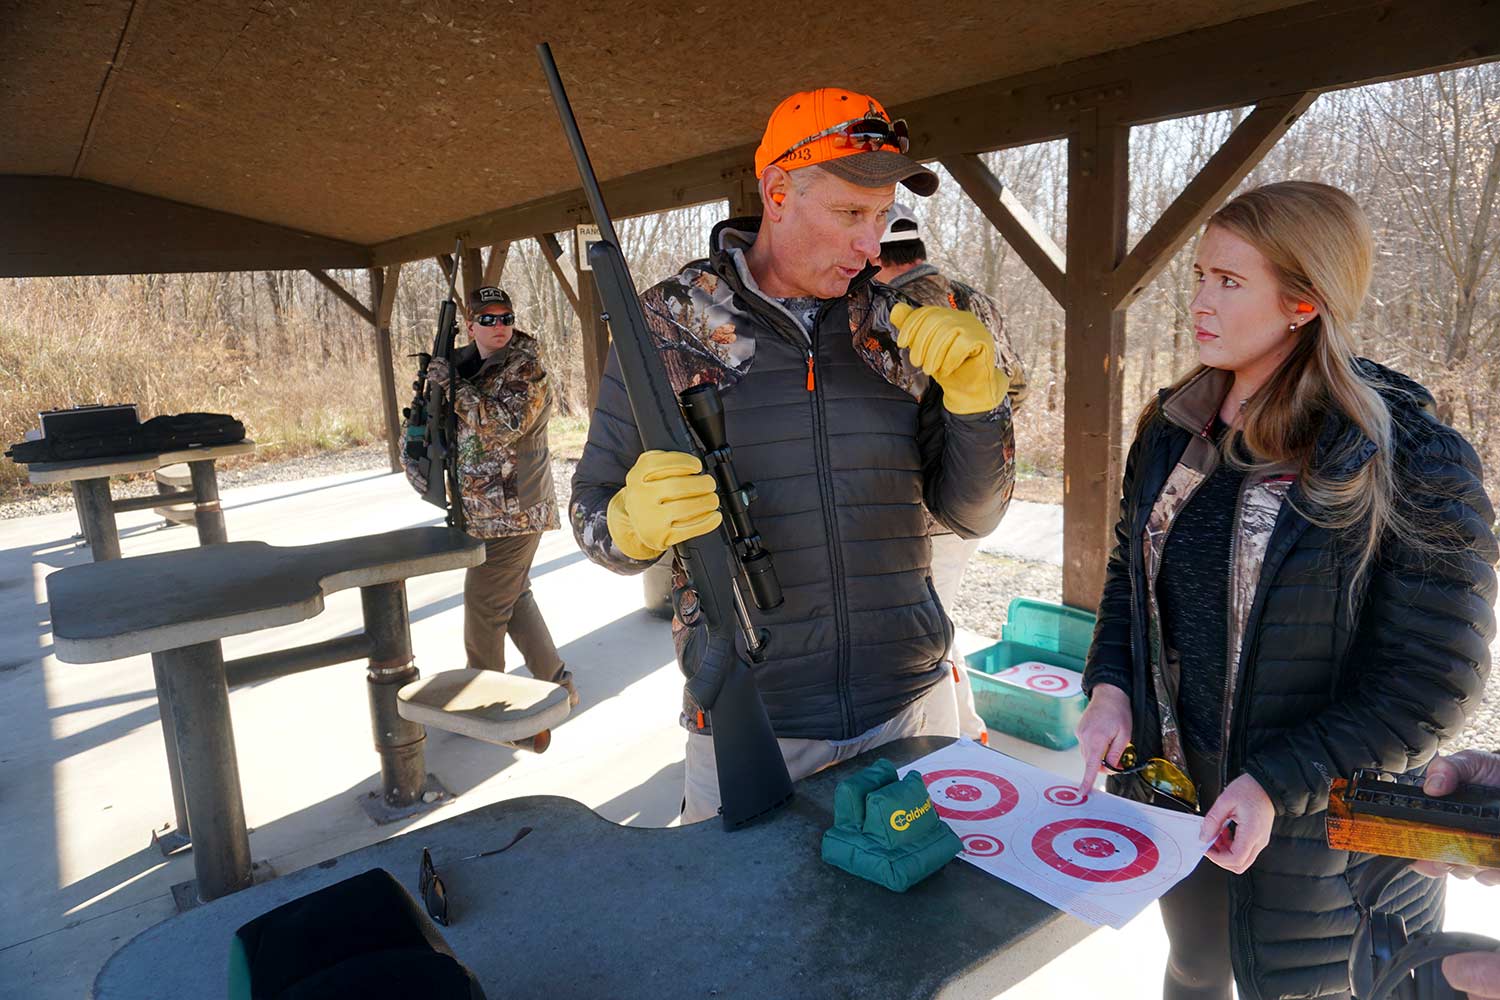 A hunter mentoring another hunter at a shooting range.